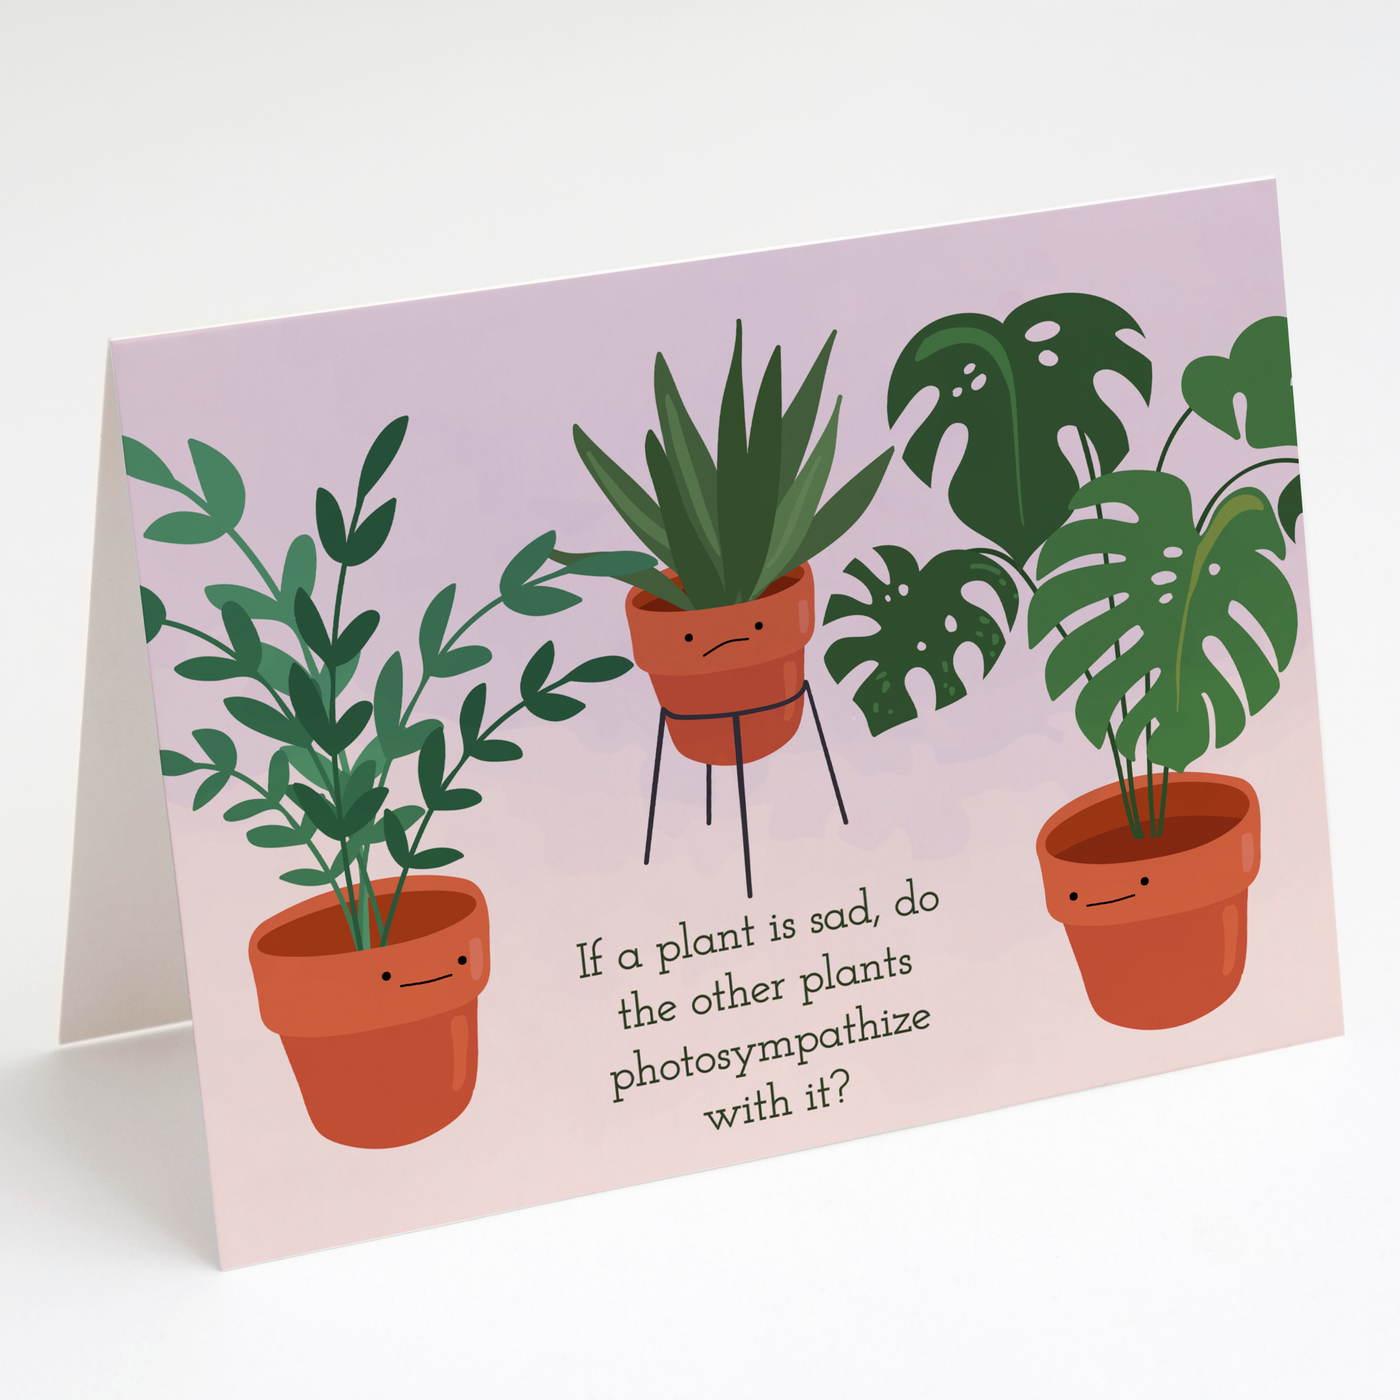 Photosympathize - Botany Card